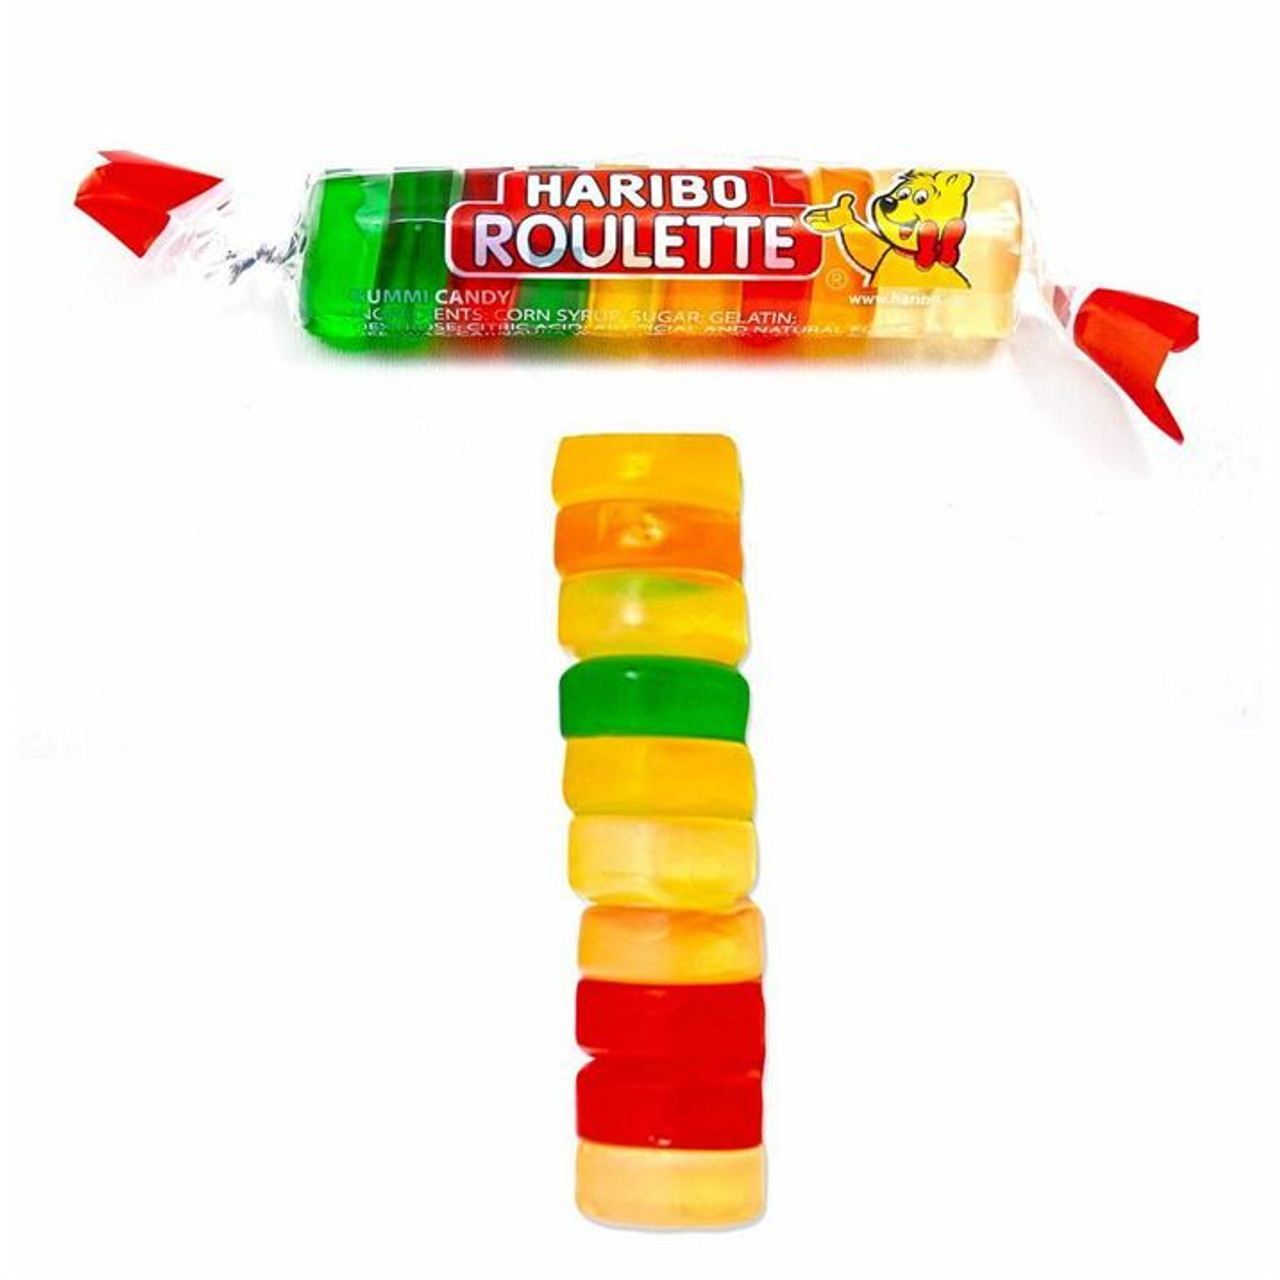 Haribo Mega Roulette – C&Js Candy Store & Scoop Shoppe